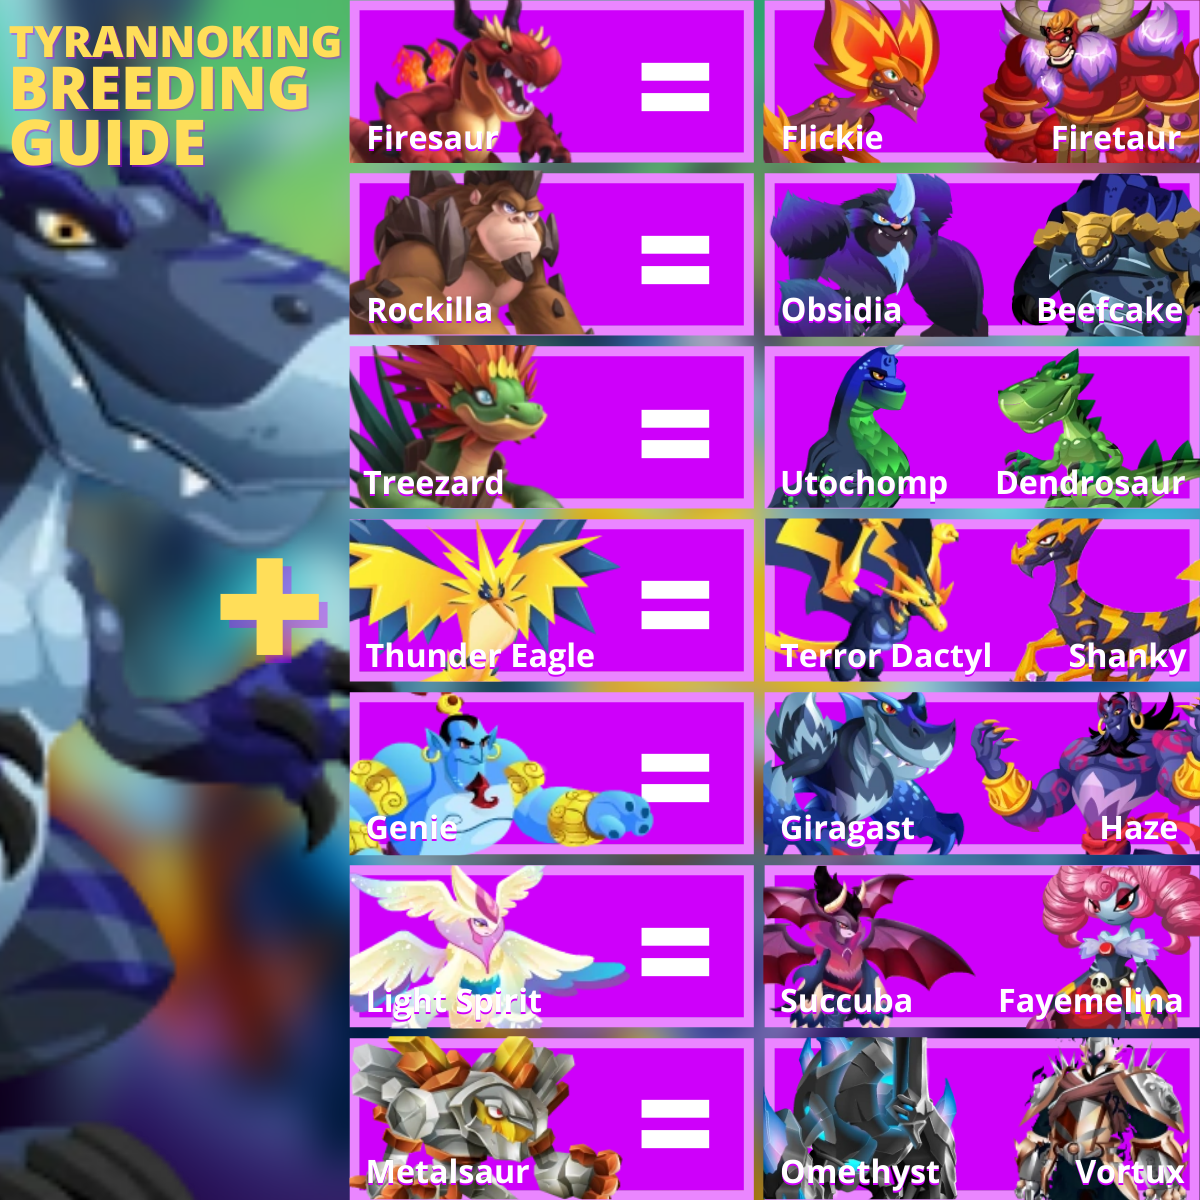 Monster Legends Breeding Guide Tyrannoking